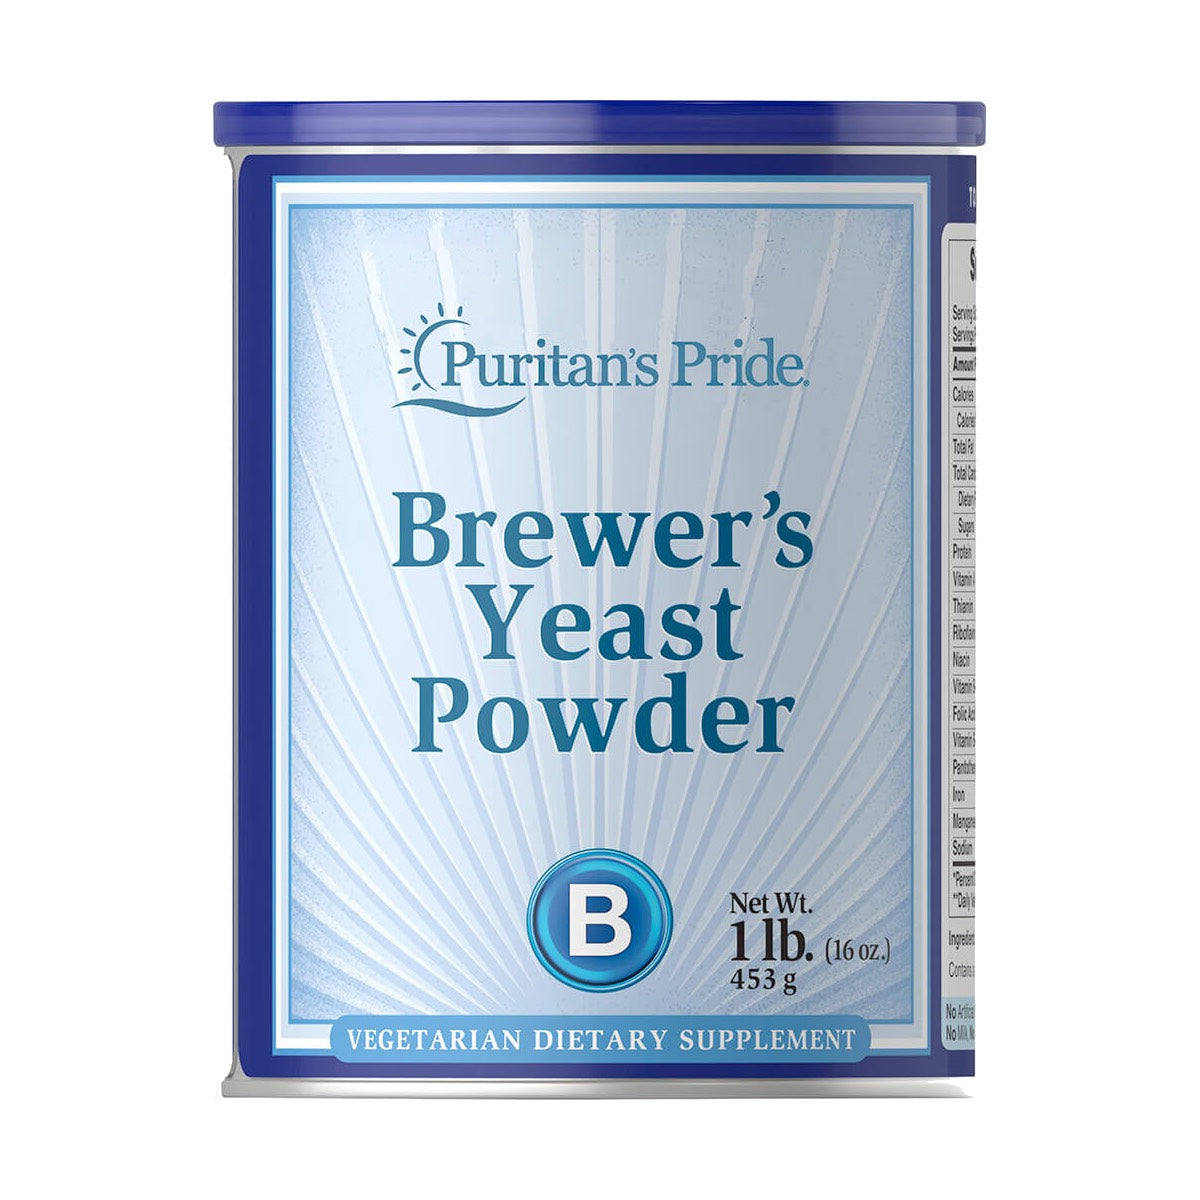 Puritan's Pride, Brewer's Yeast Powder